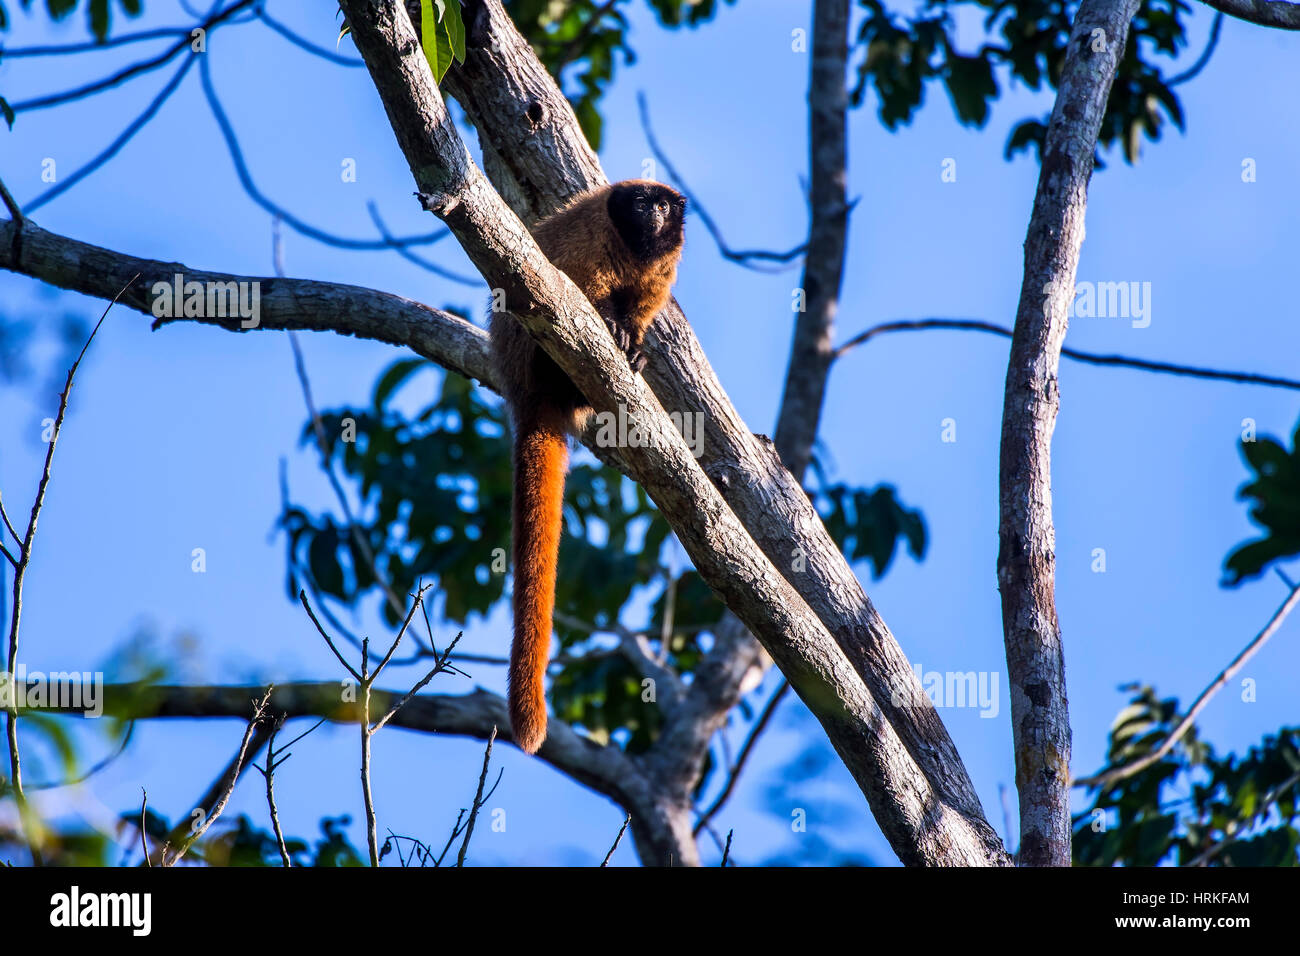 Masked titi monkey (Callicebus personatus), photographed in Linhares/Sooretama, Espírito Santo - Brazil. Atlantic forest Biome. Wild animal. Stock Photo